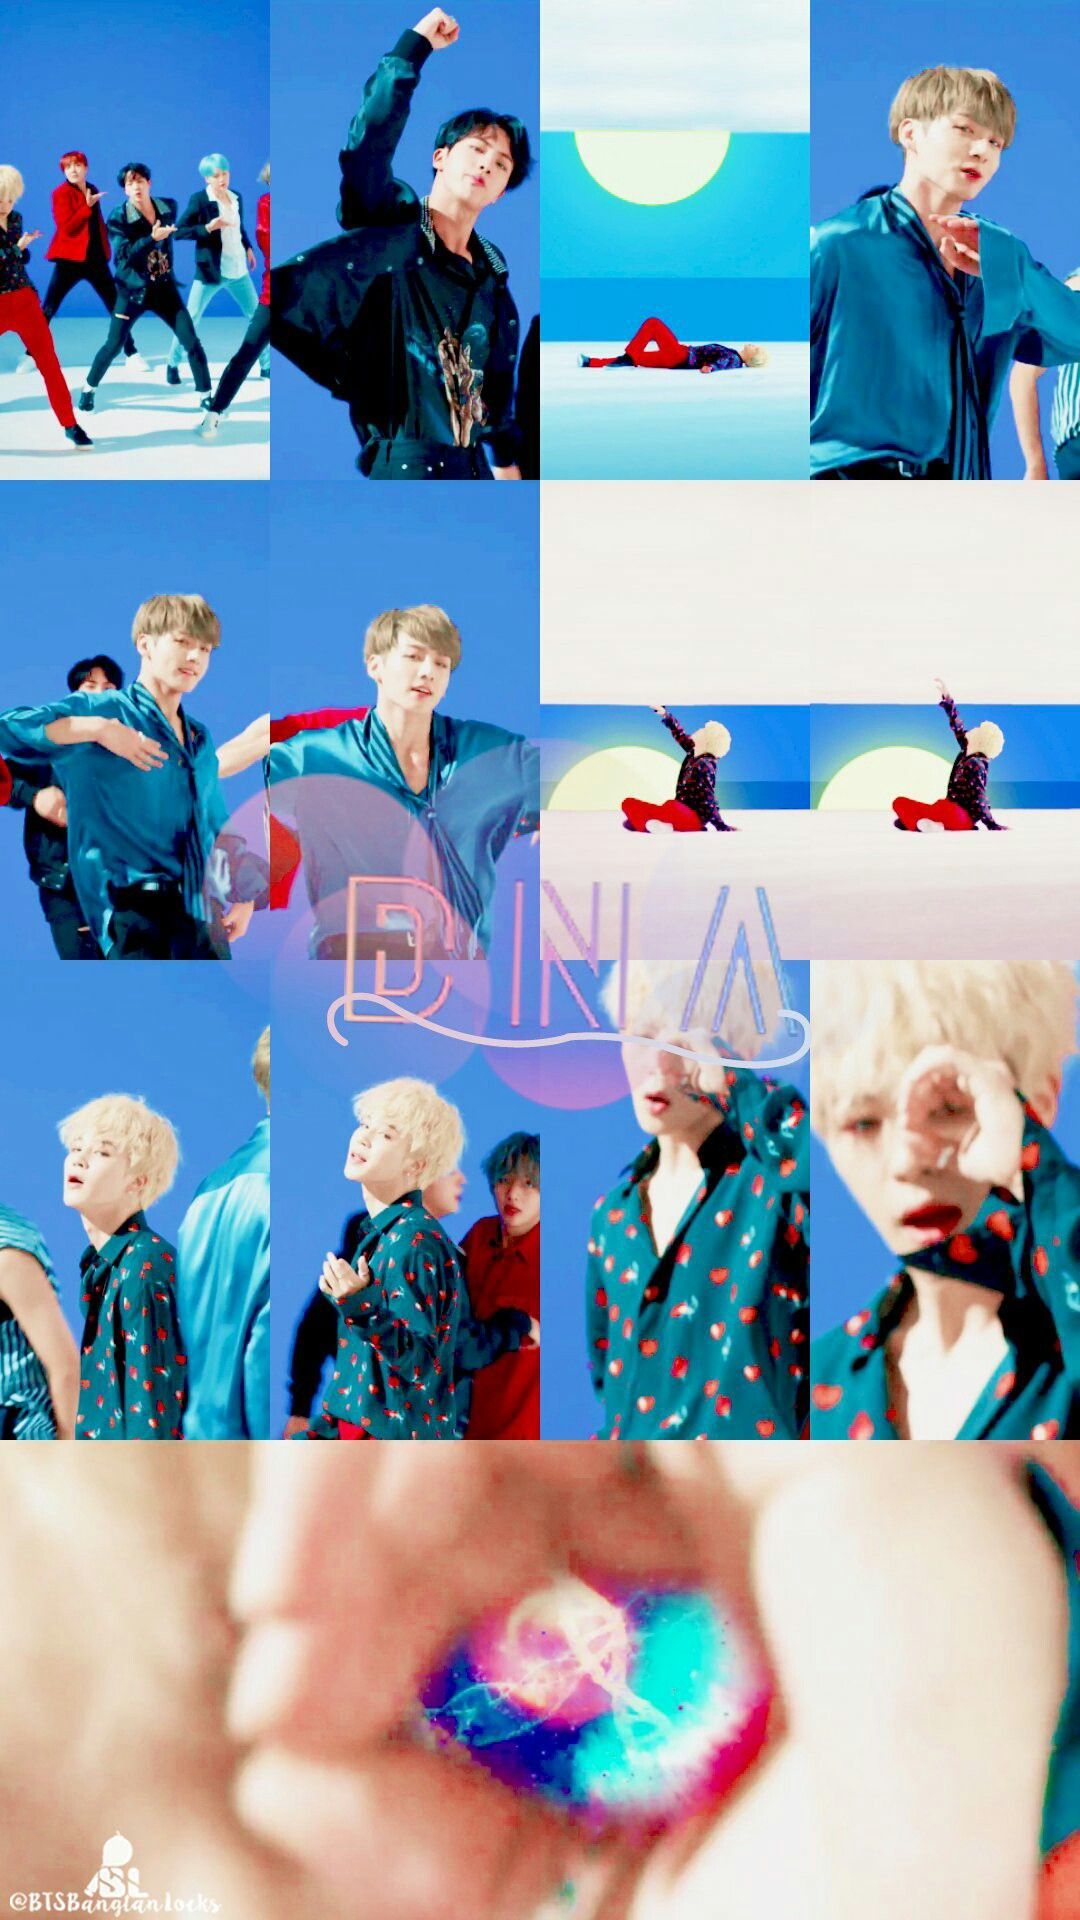 Bts dna || wallpaper ♡ | BTS ♥ | Pinterest | BTS and Exo